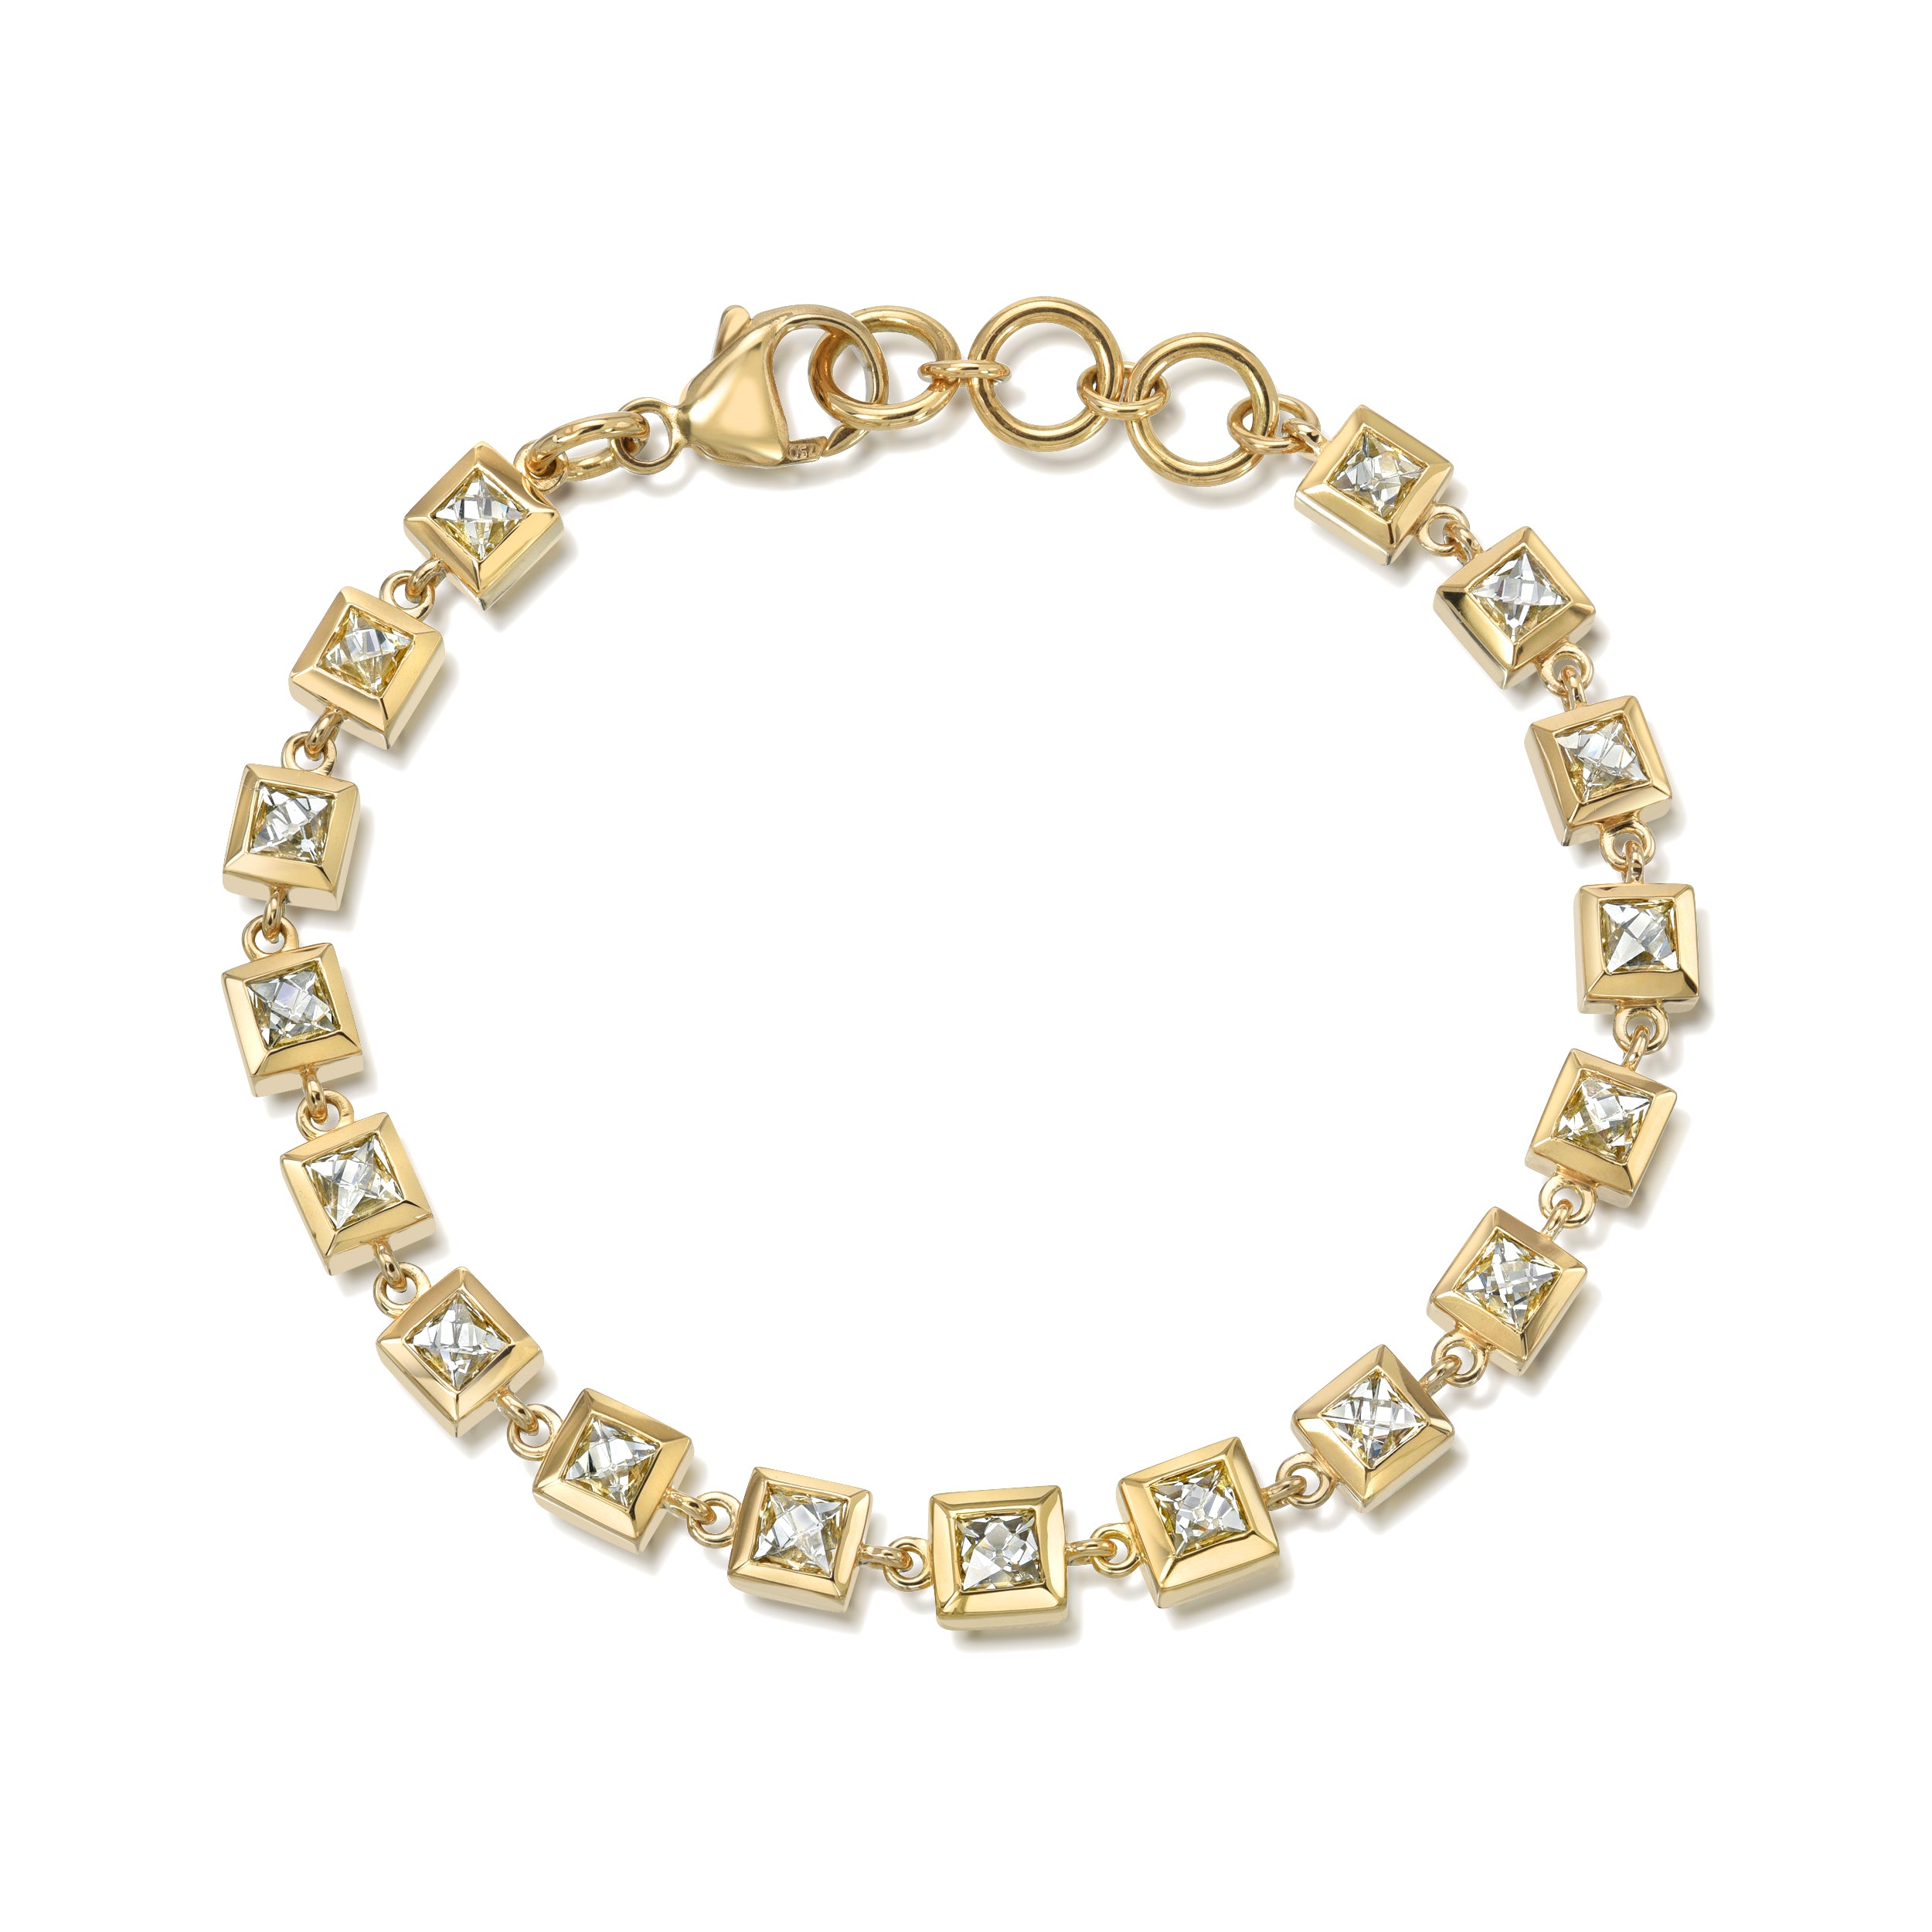 SINGLE STONE SMALL KARINA BRACELET featuring 5.45ctw J-K/VS-SI French cut diamonds bezel set on a handcrafted 18K yellow gold tennis bracelet. Bracelet measures 7.25".